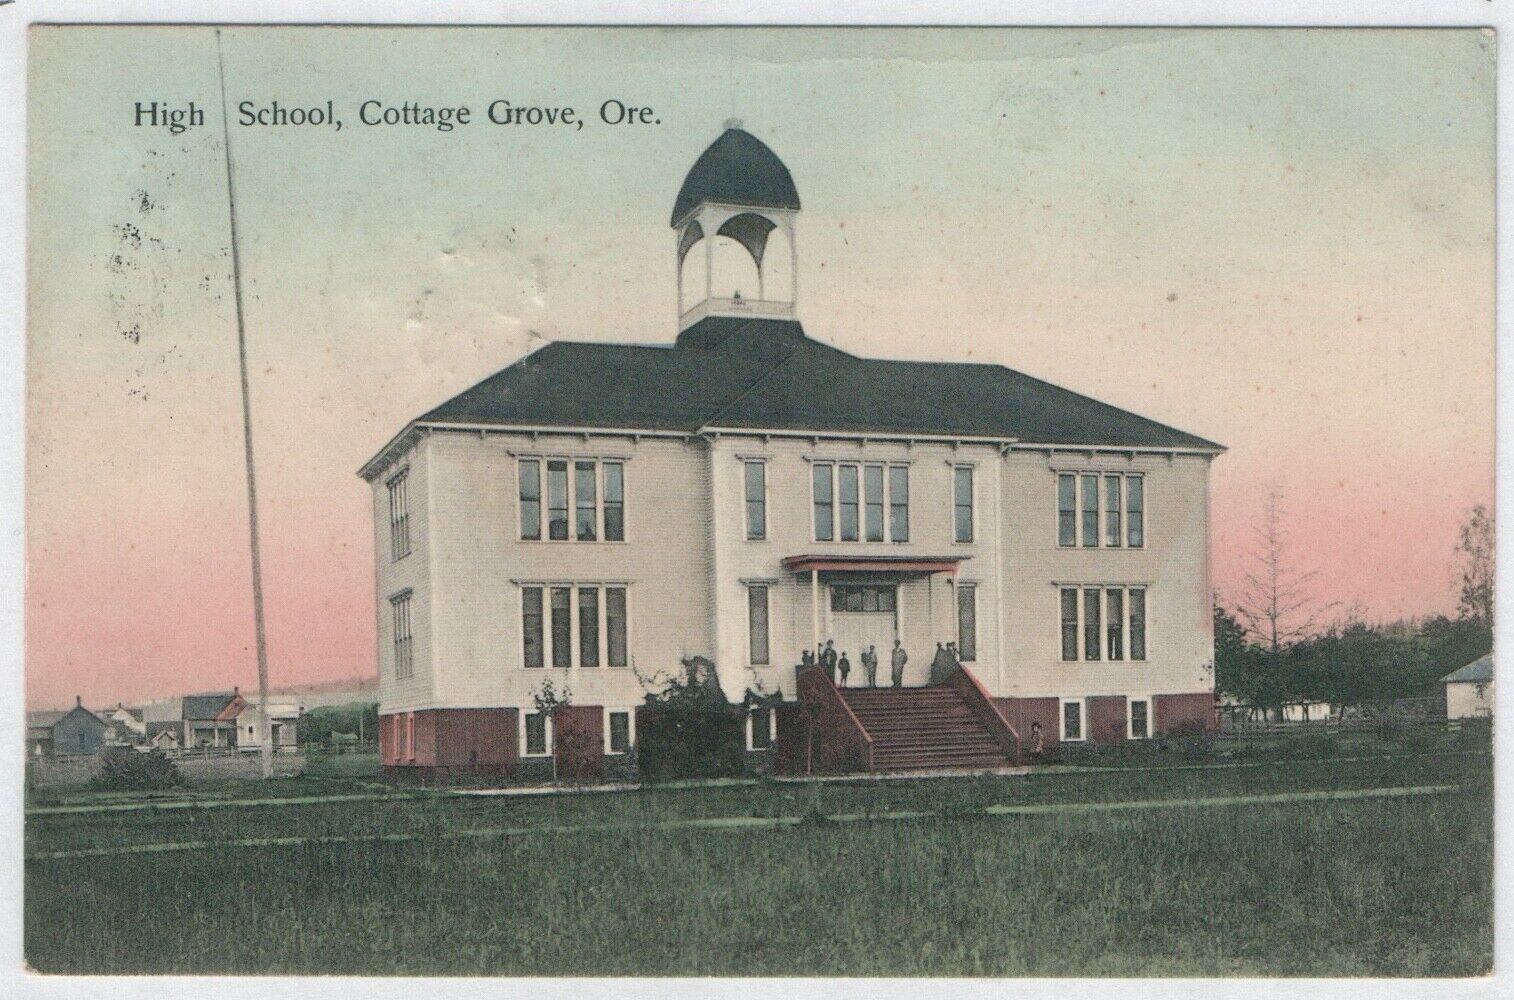 High School, Cottage Grove, Oregon, Printed Postcard, Postmarked 1910